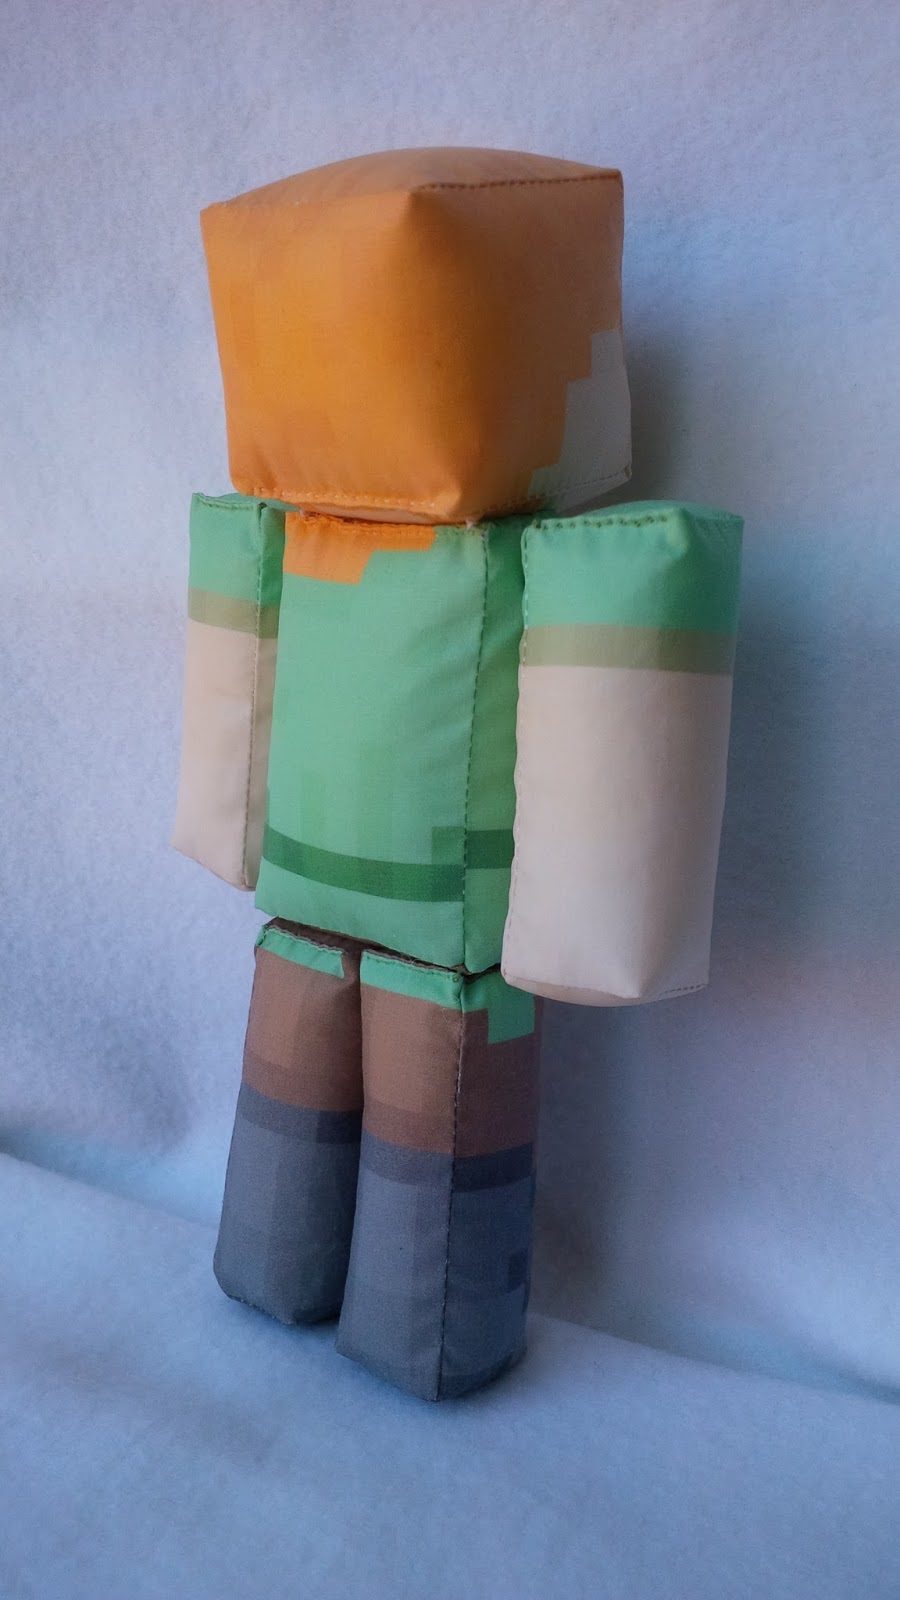 CraftingNerdy: Minecraft inspired Steve and Alex plush toys